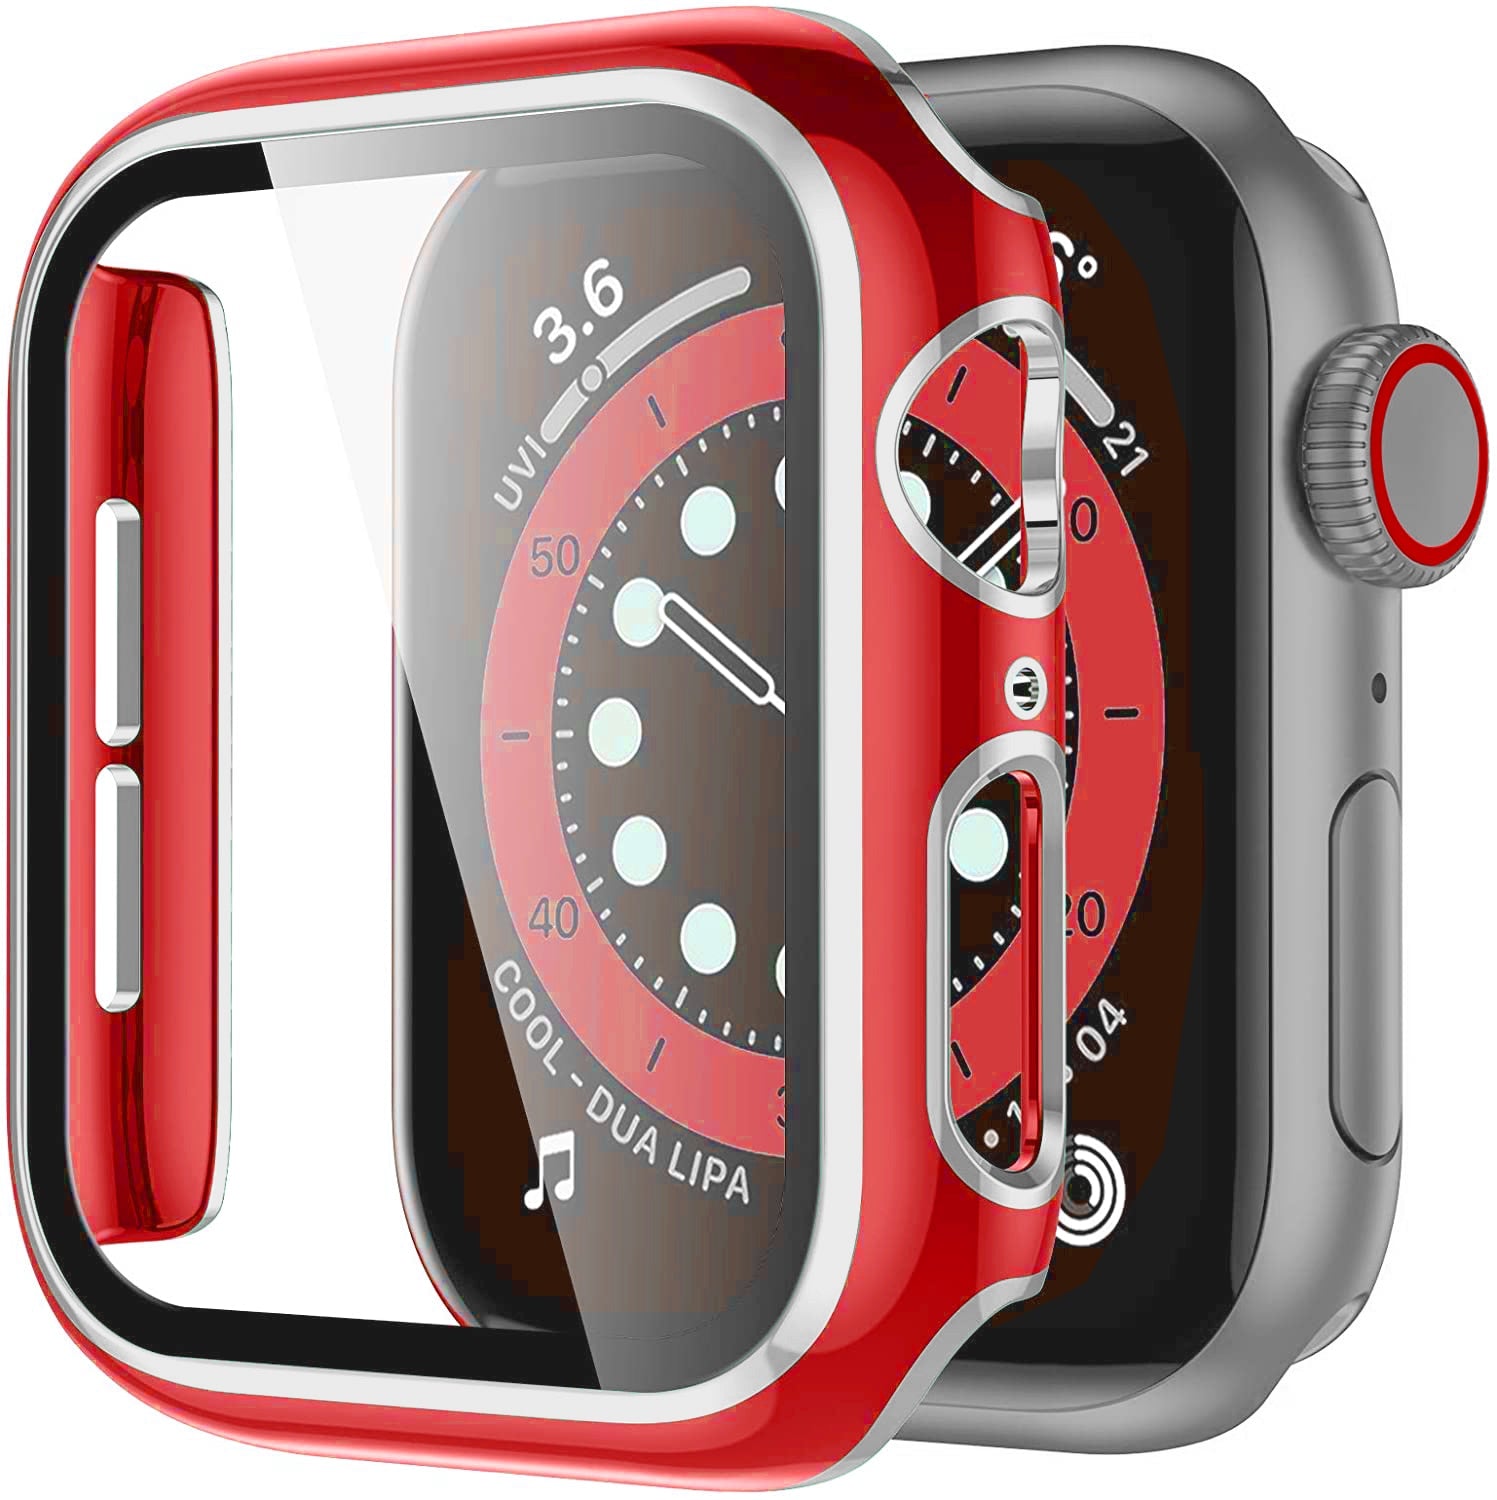 Diamond ™ - Protector + lámina Apple Watch - ENGLA Chile ® red silver / 38mm series 321